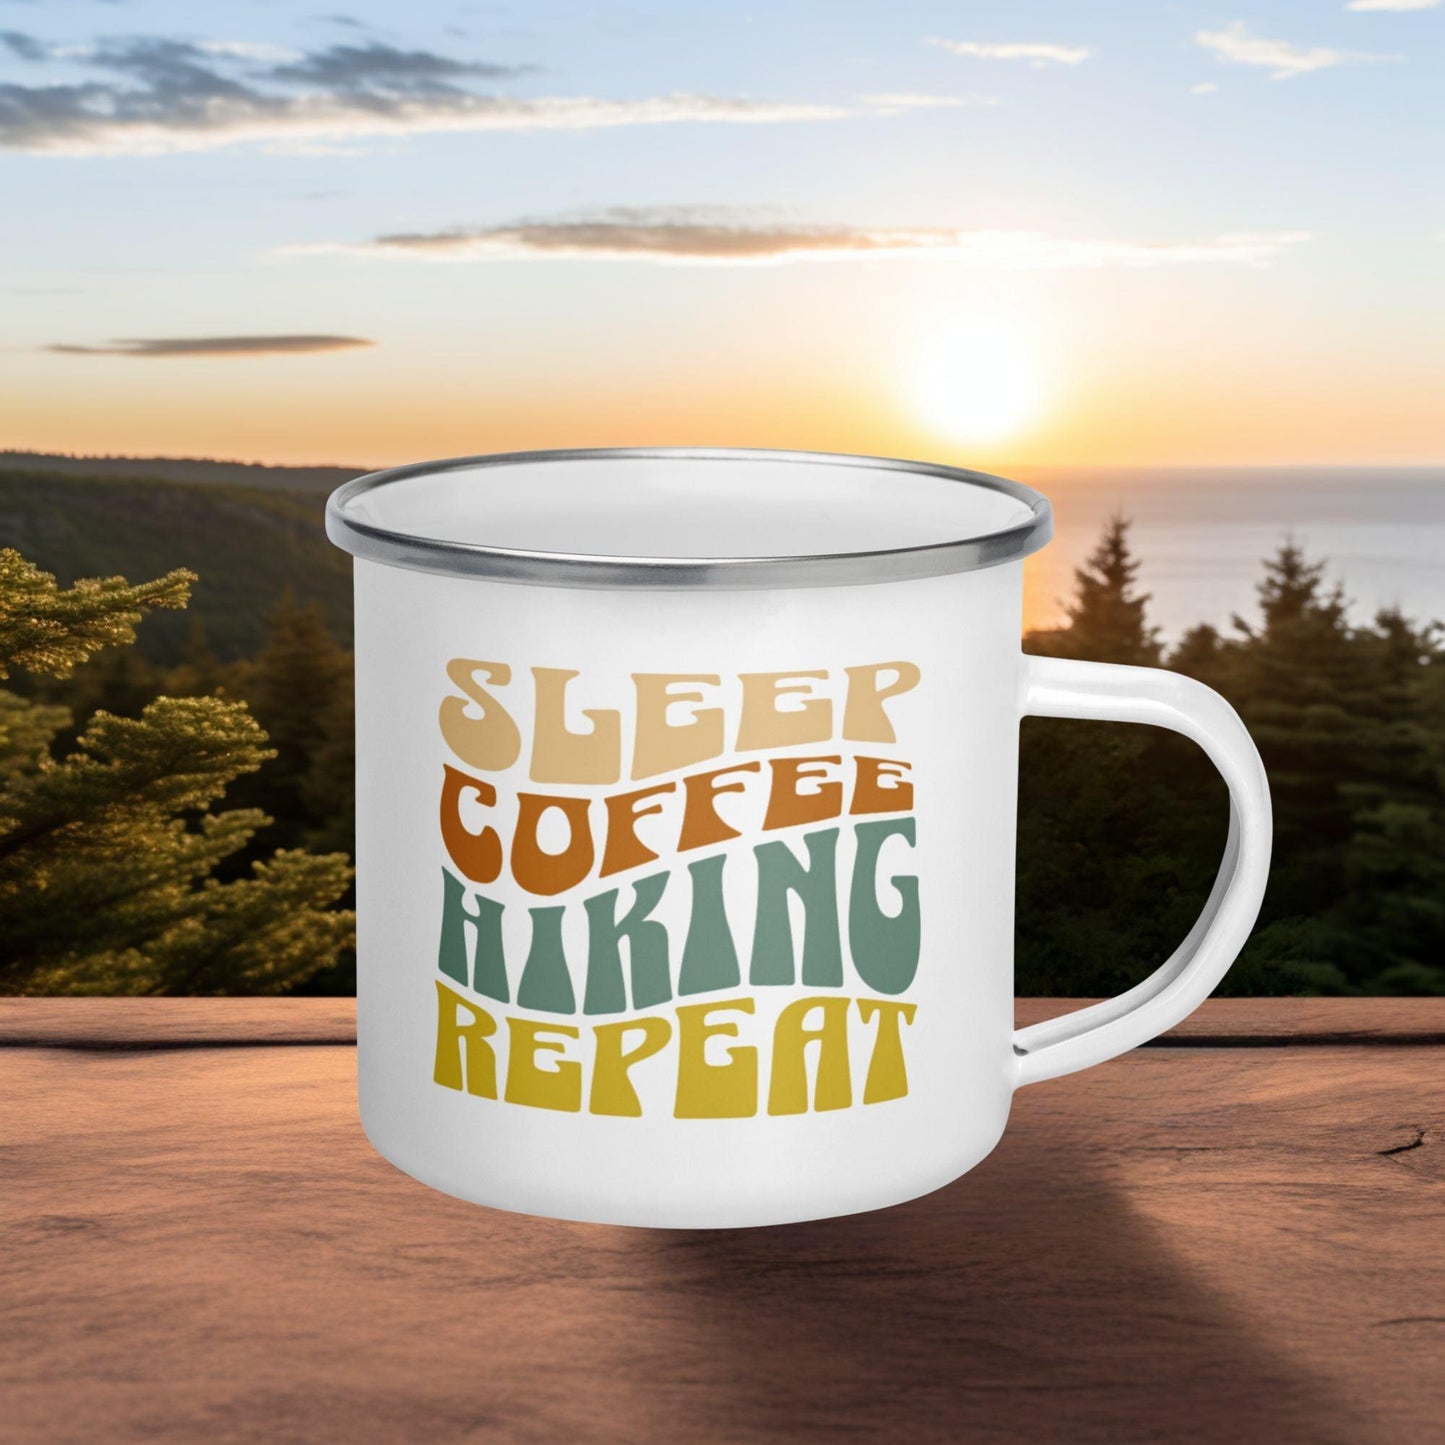 Coffee & Hiking Lovers Enamel Mug - Adventure Threads Company